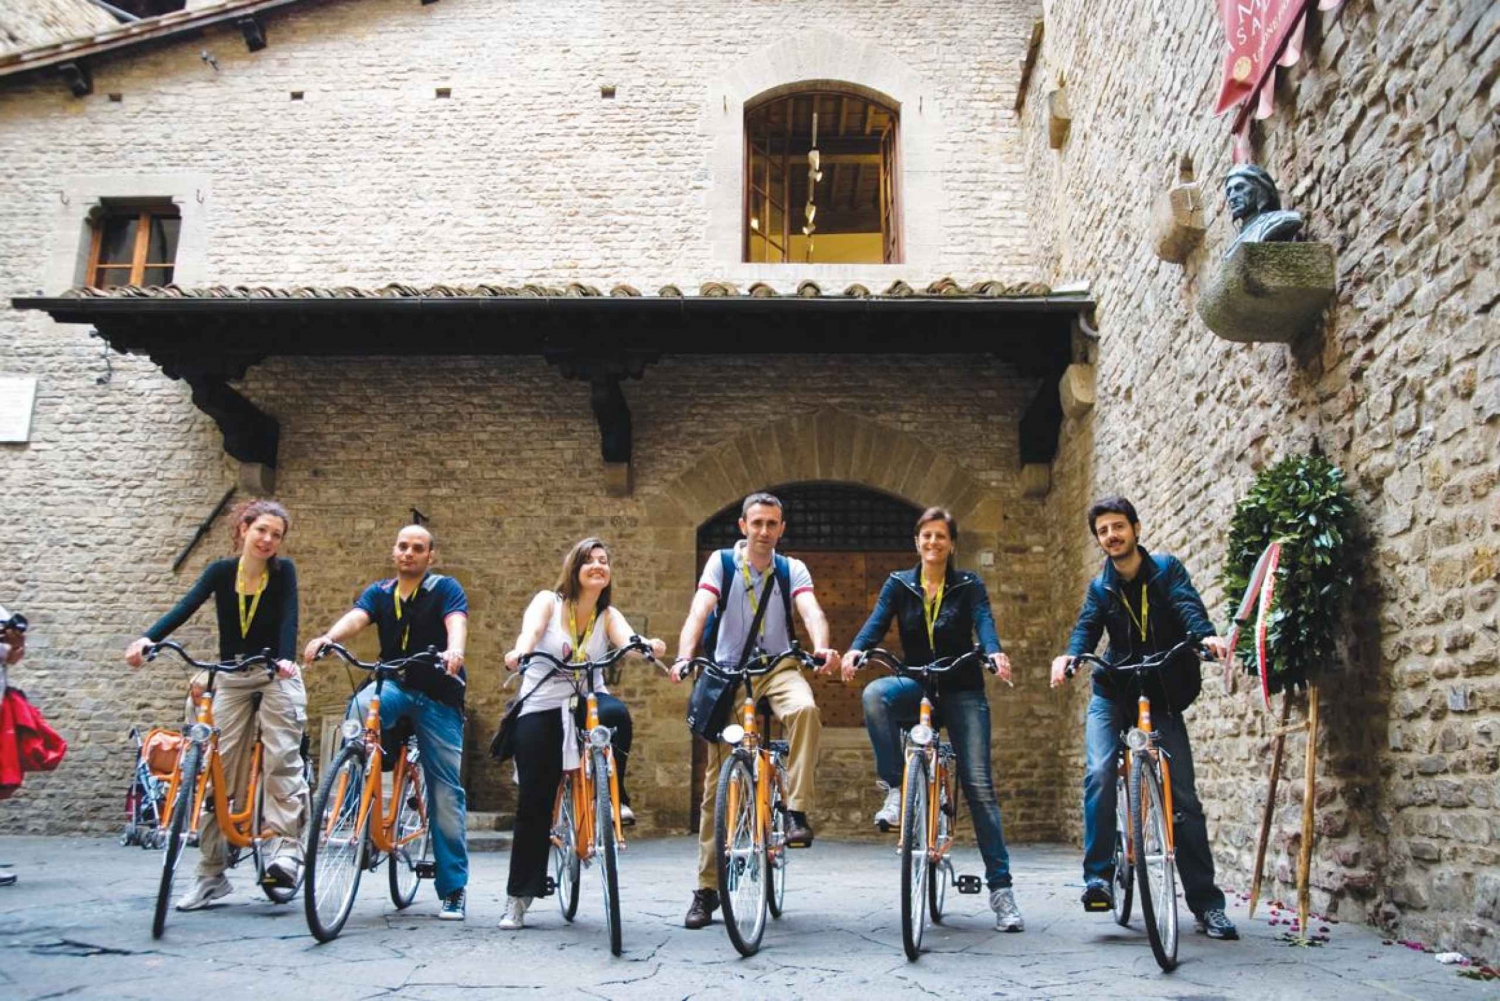 Ride through Renaissance: 2-Hour Florence Bike Tour